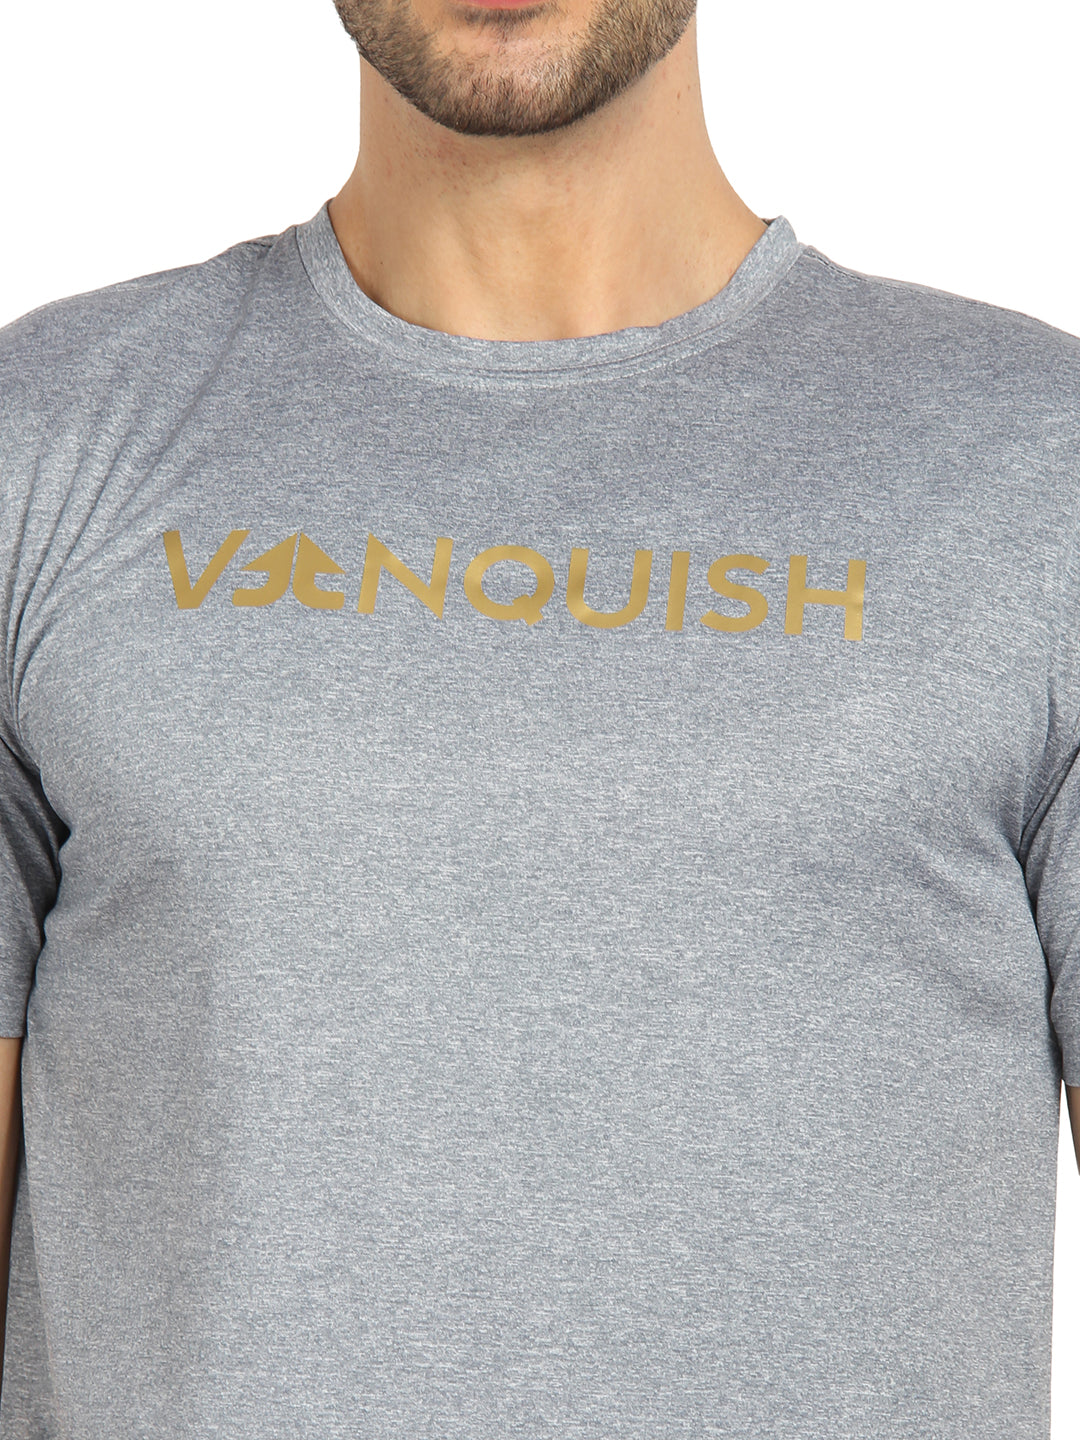 VANQUISH TEE Men Tshirts & Graphic Tees